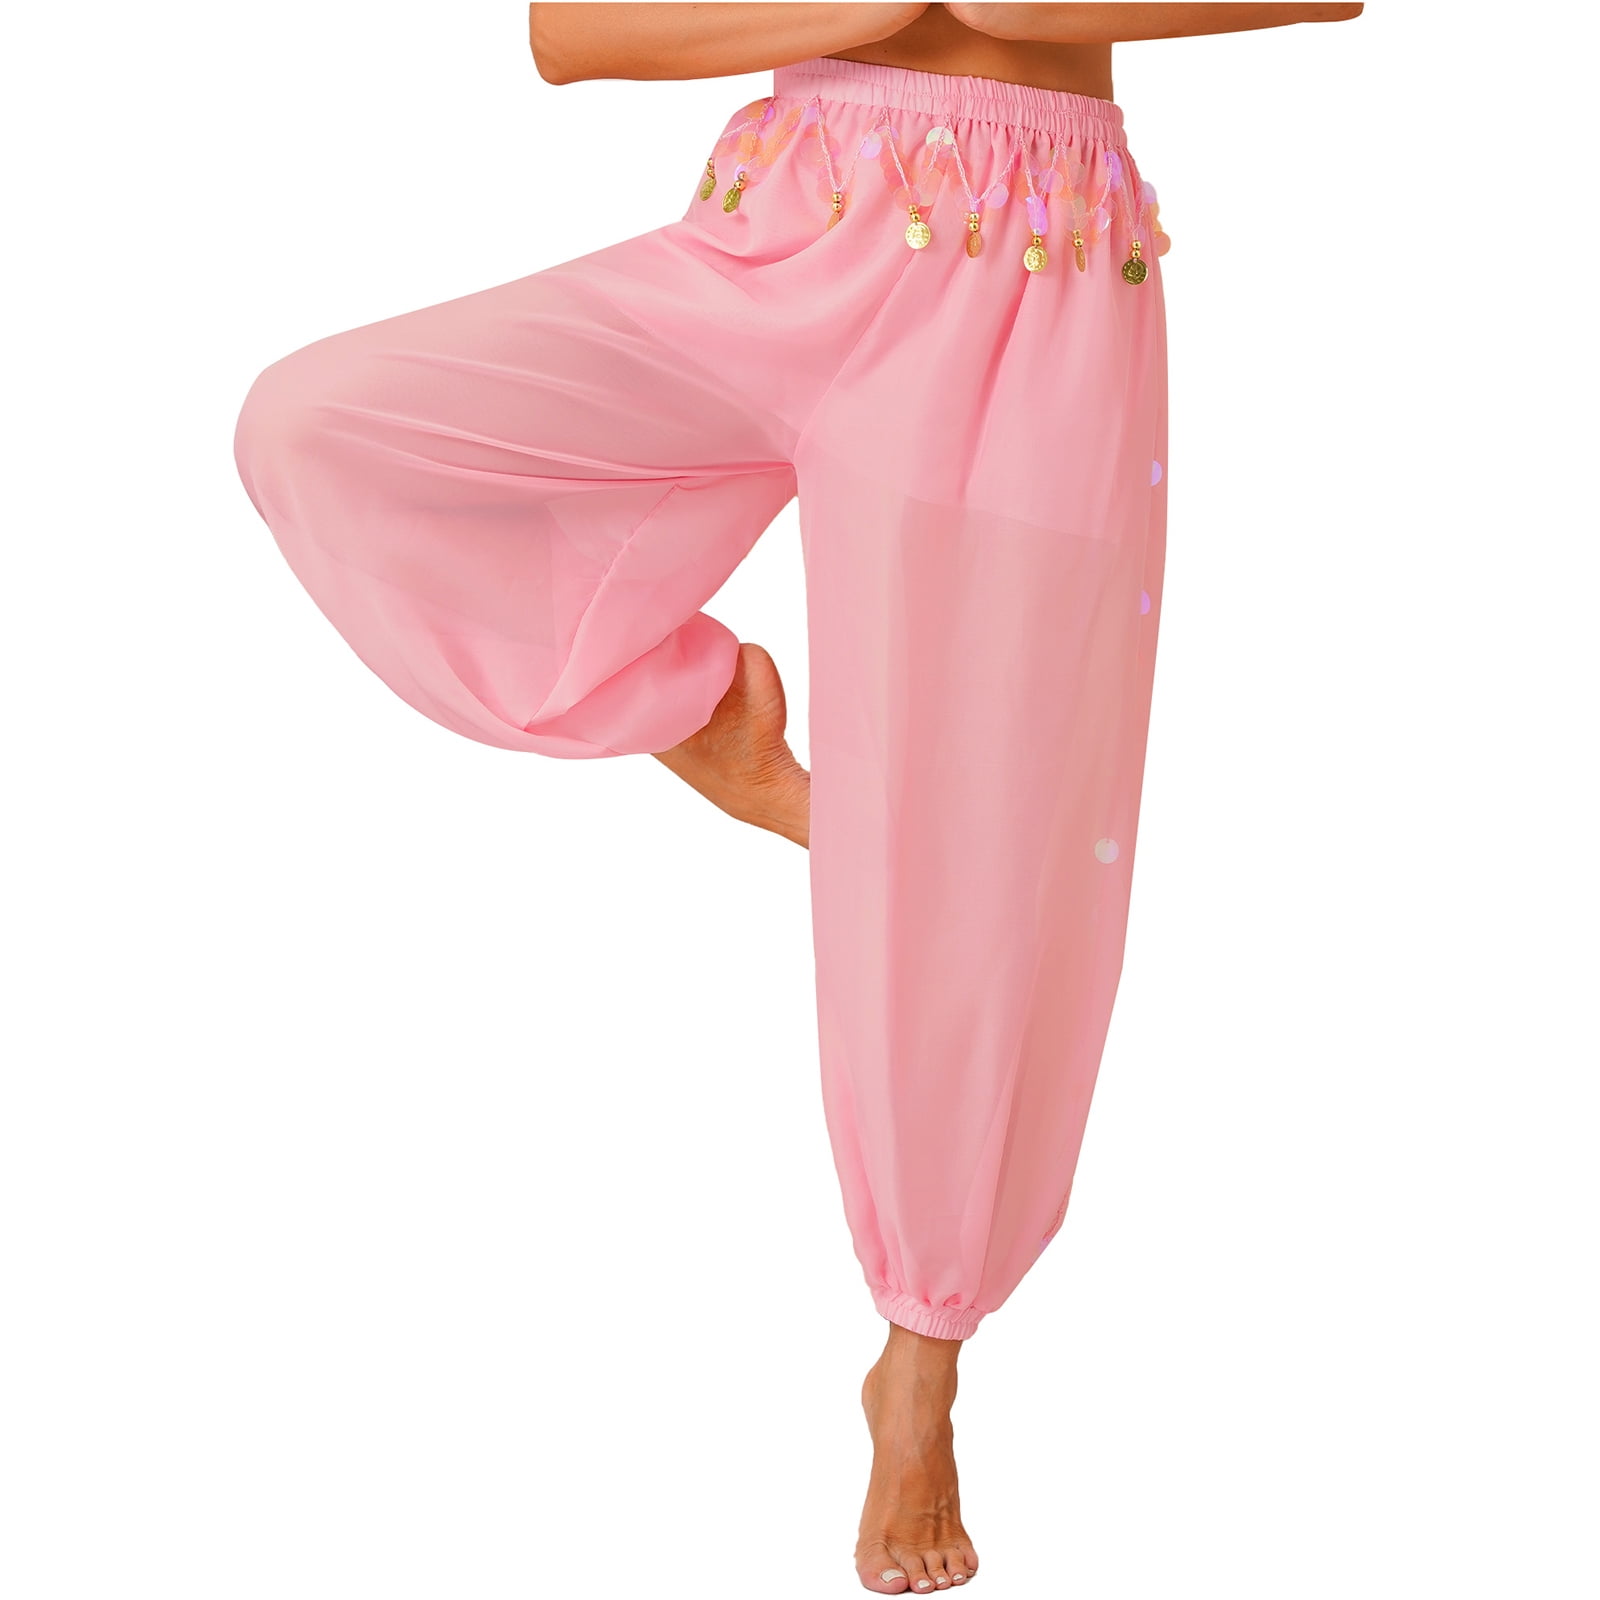 YONGHS Women's Belly Dance Costume Coins Side Split Lantern Harem Pants  Arabic Halloween Trousers Hot Pink One Size 